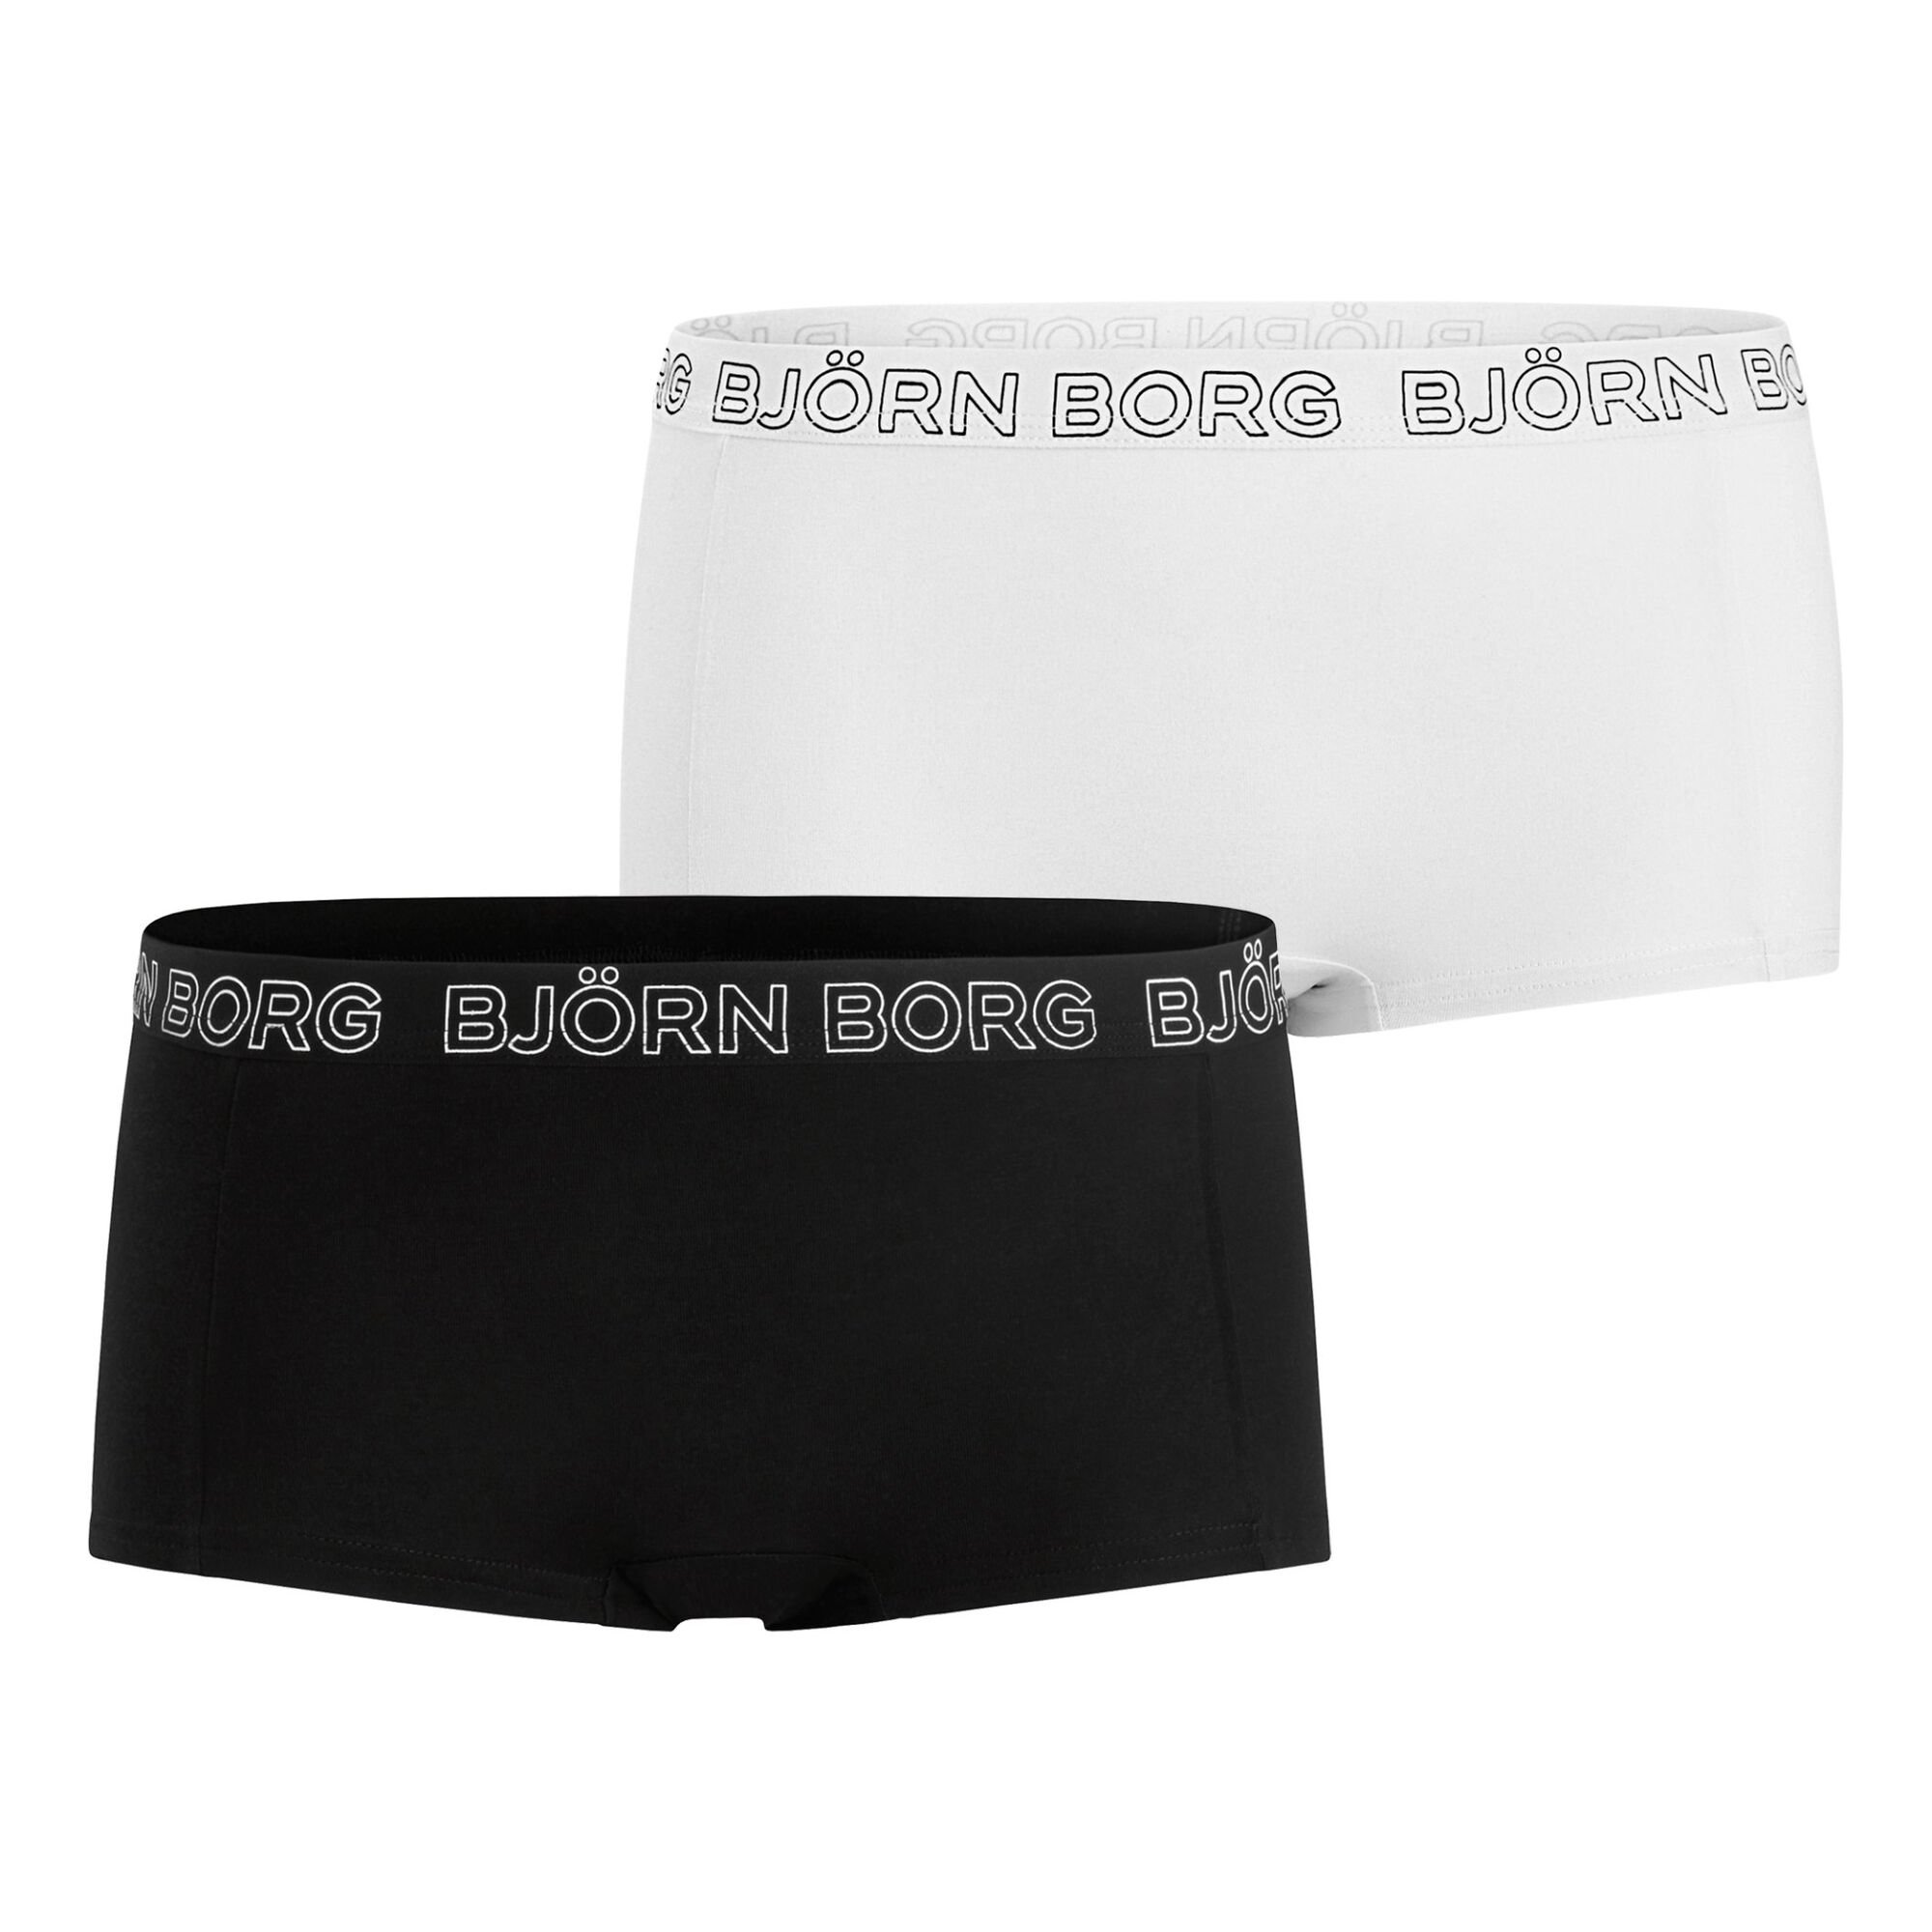 Aftrekken huren geweten buy Björn Borg Solids Mia Mini Shorts 2 Pack Women - Black, White online |  Tennis-Point